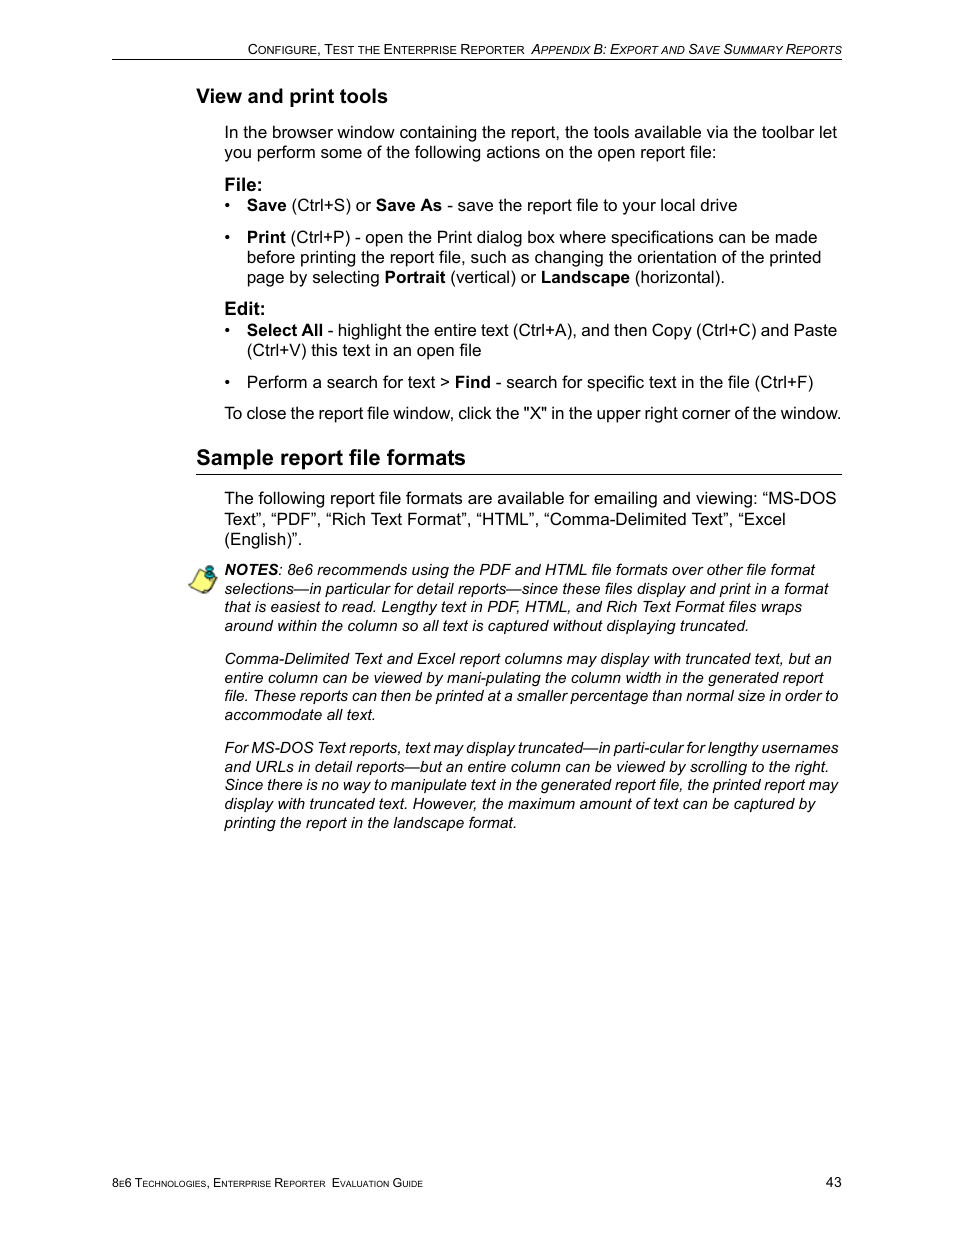 View and print tools, Sample report file formats, File | Edit | 8e6 Technologies Enterprise Reporter ER HL/SL User Manual | Page 47 / 48